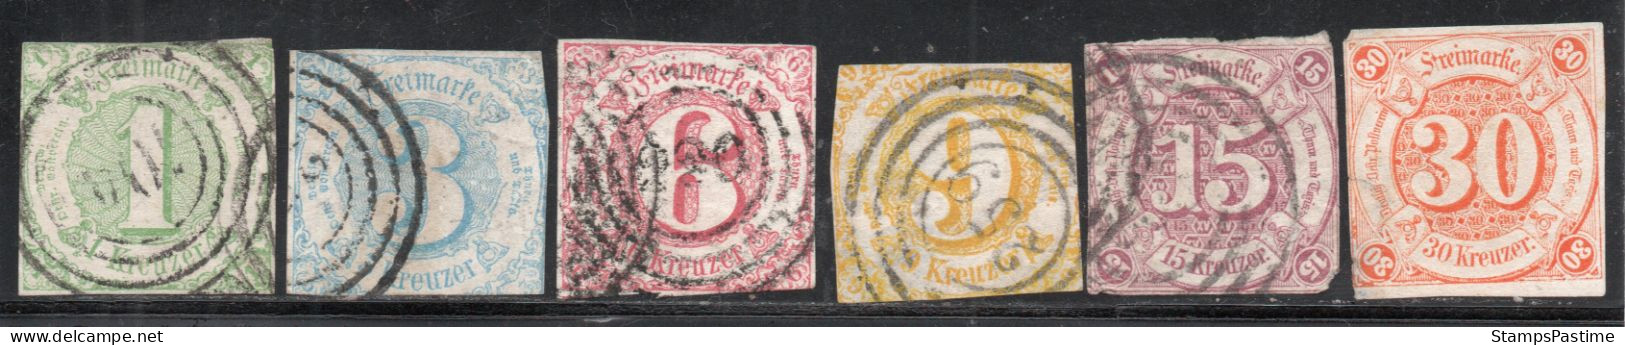 ALEMANIA – THURN Y TAXIS SUR Serie Completa X 6 Sellos Usados CIFRAS Año 1859 – Valorizada En Catálogo € 374,25 - Usados